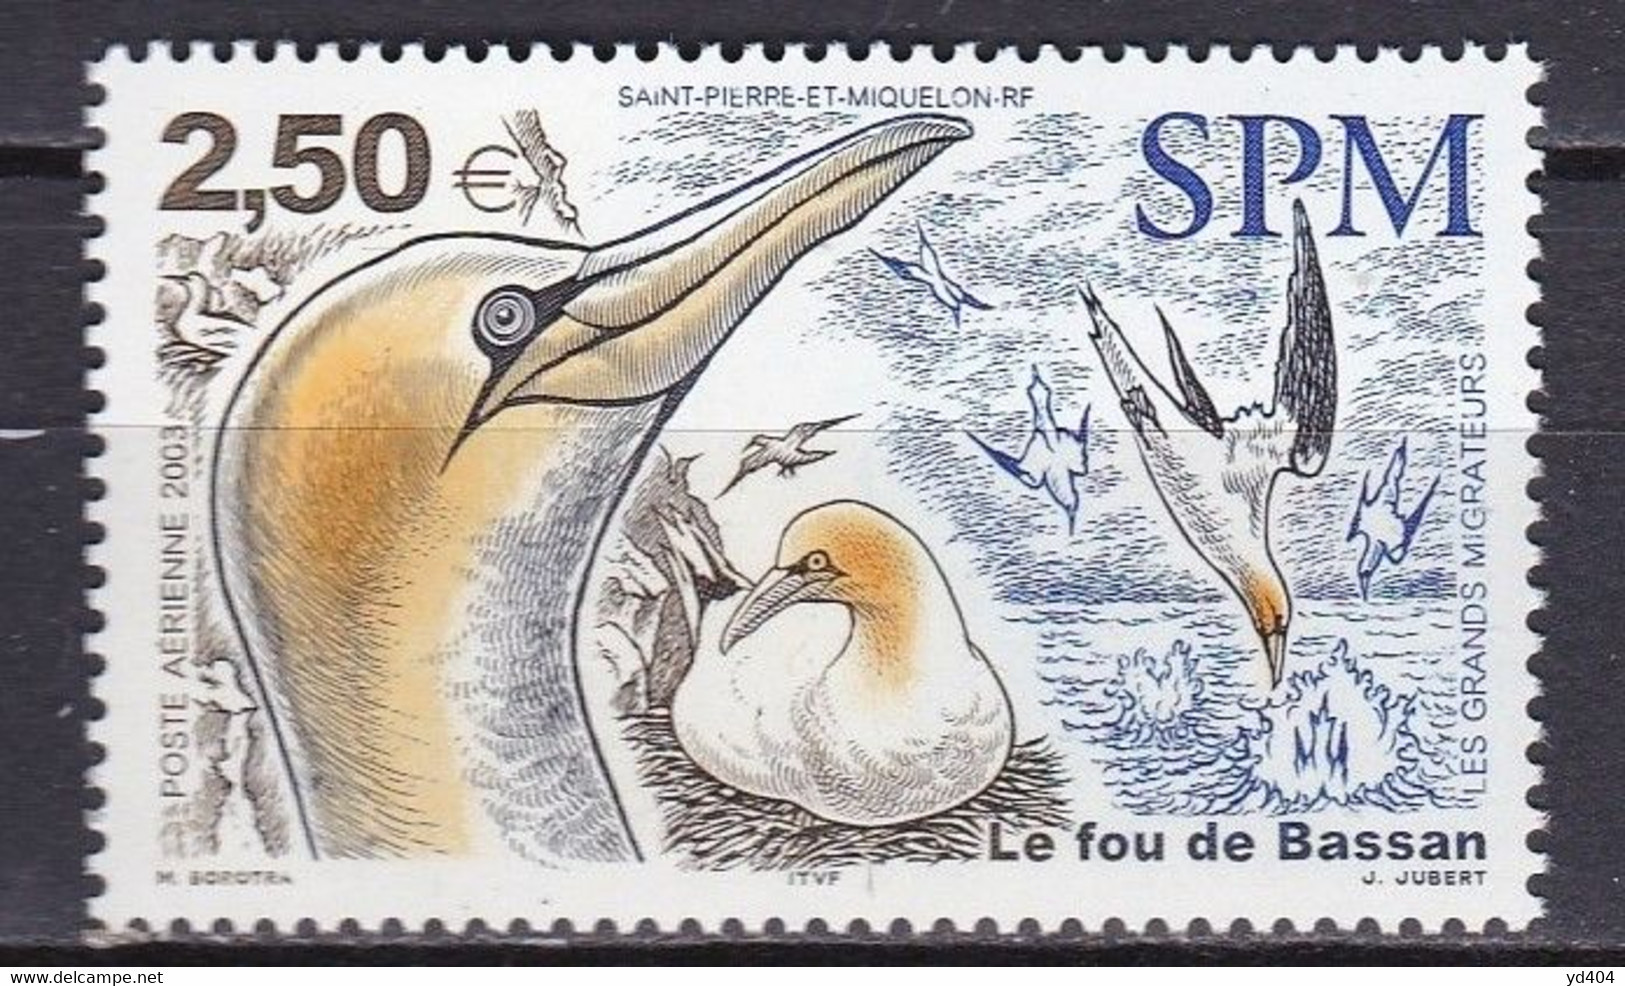 PM-426 – ST PIERRE & MIQUELON – AIRMAIL - 2003 – MIGRATORY BIRDS – Y&T # 83 MNH 10 € - Unused Stamps